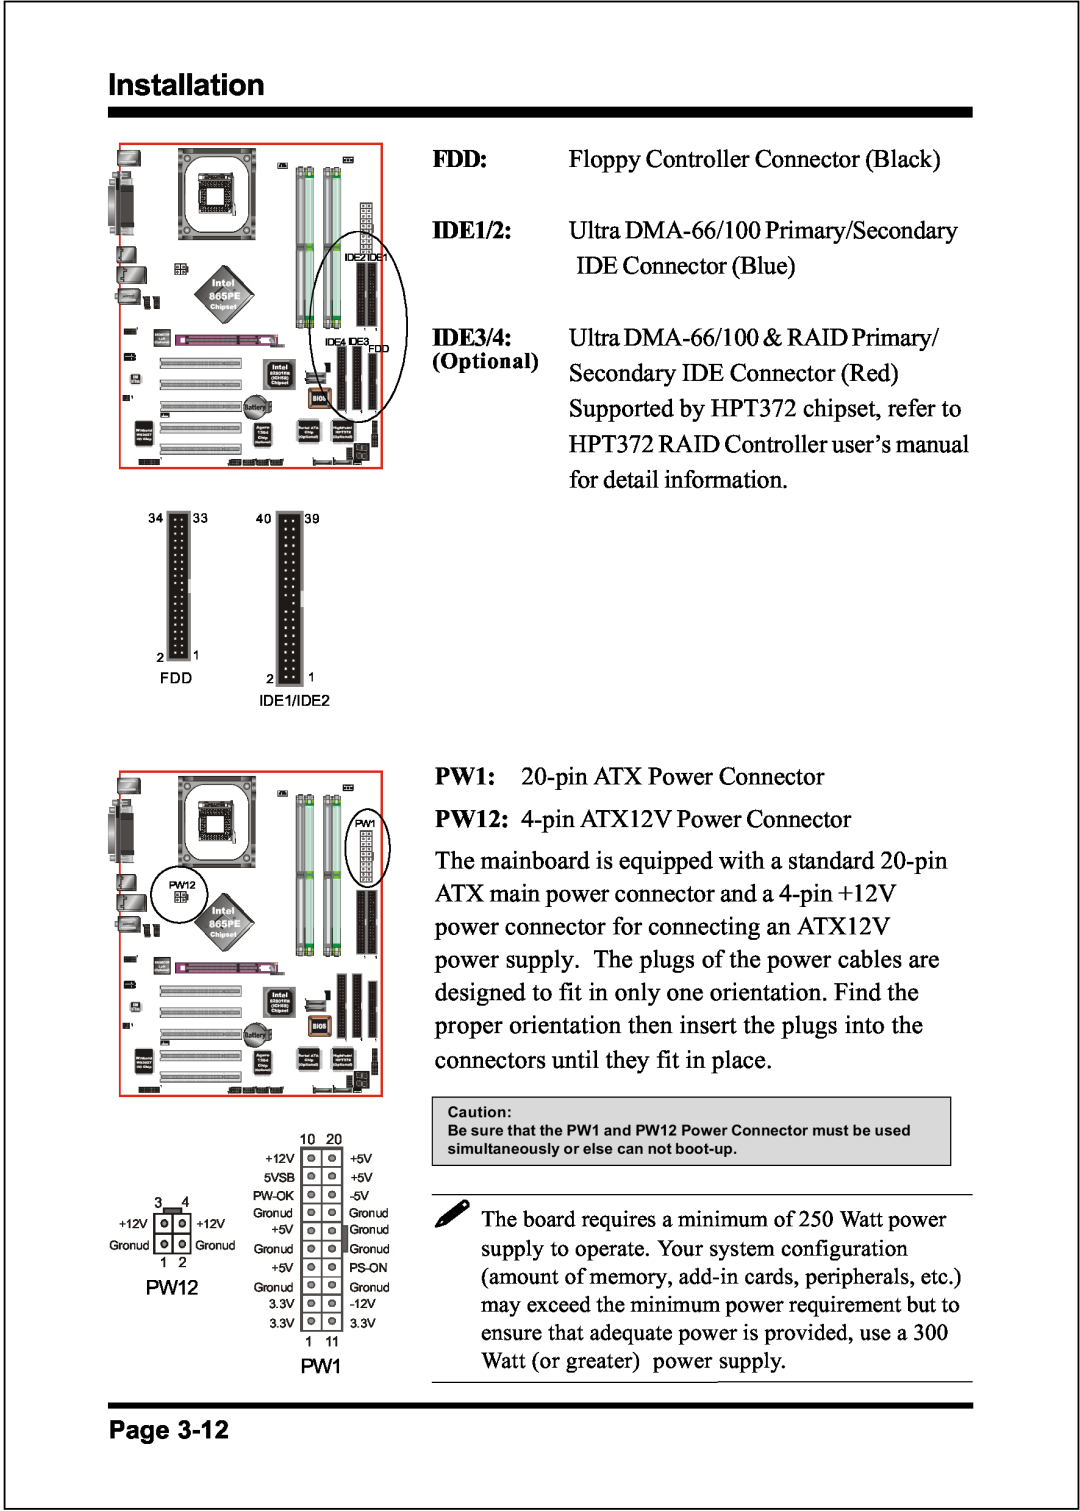 Intel FSB800 (PC2700) Installation, FDD IDE1/2 IDE3/4, Floppy Controller Connector Black, PW1: 20-pinATX Power Connector 